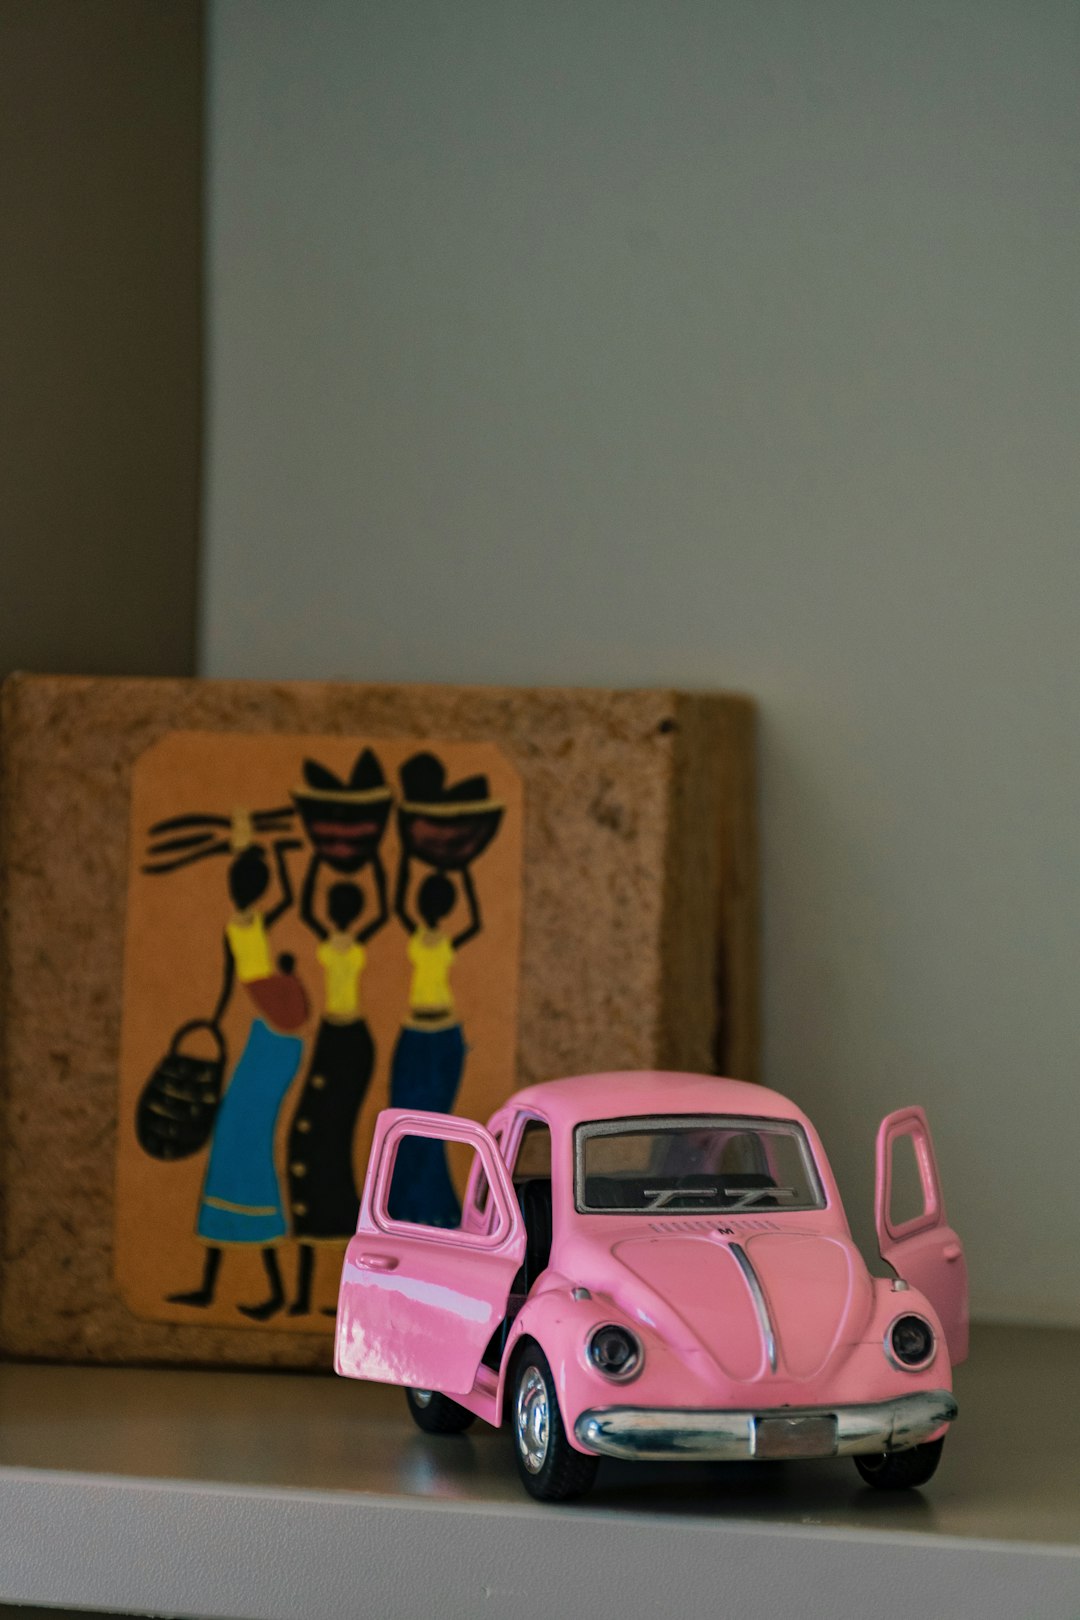 pink car toy beside brown cardboard box